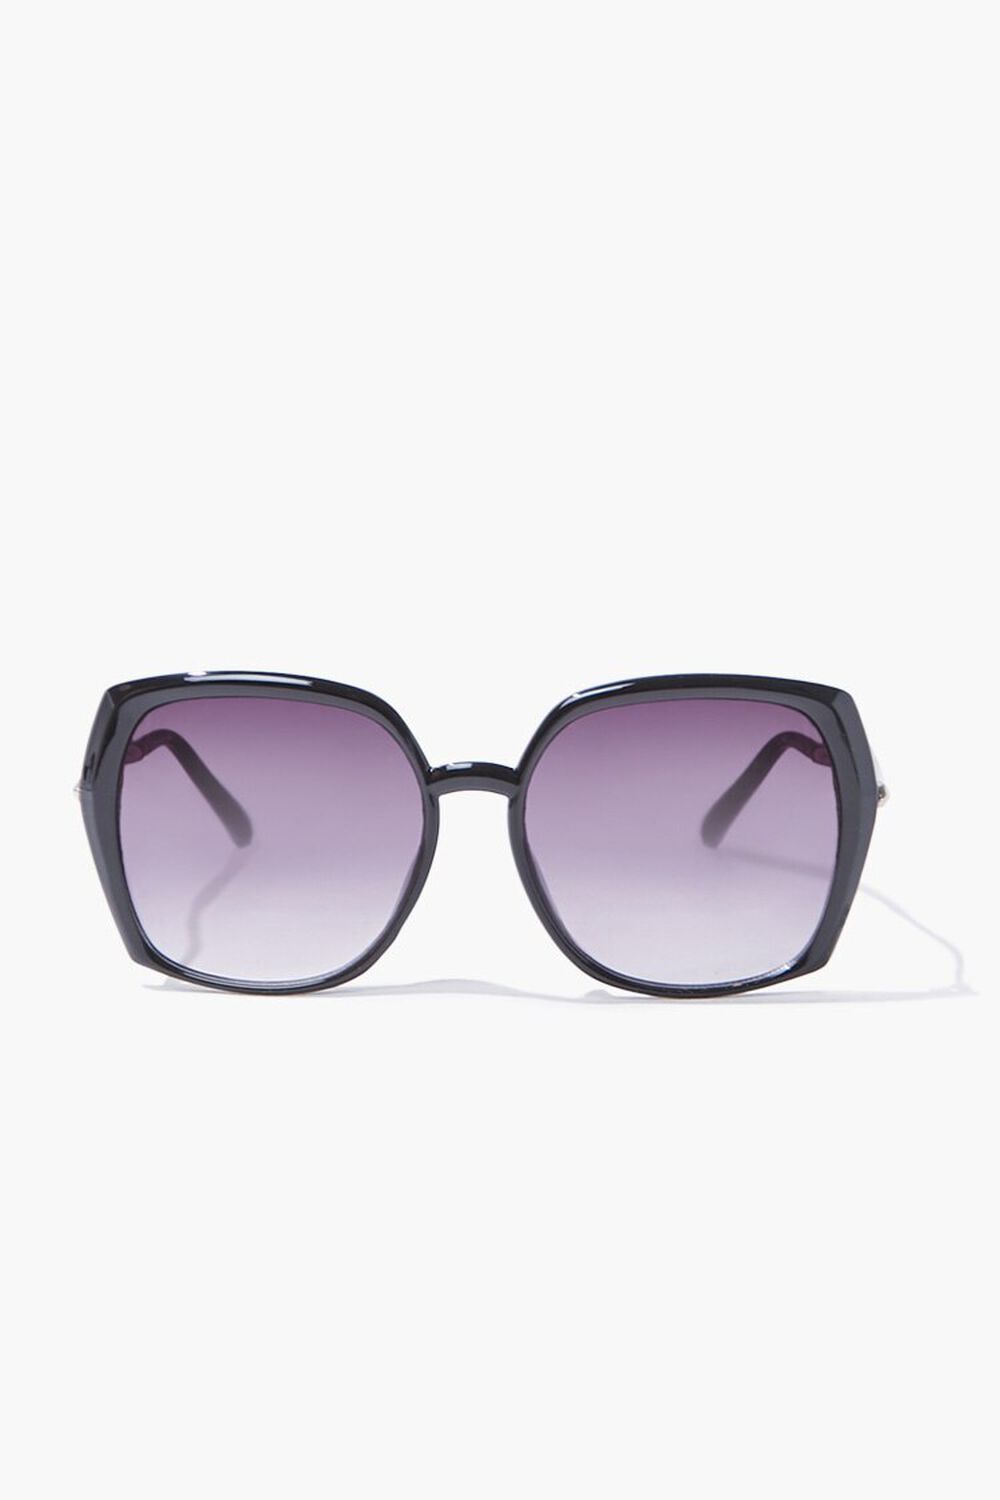 Square Tinted Sunglasses, image 1